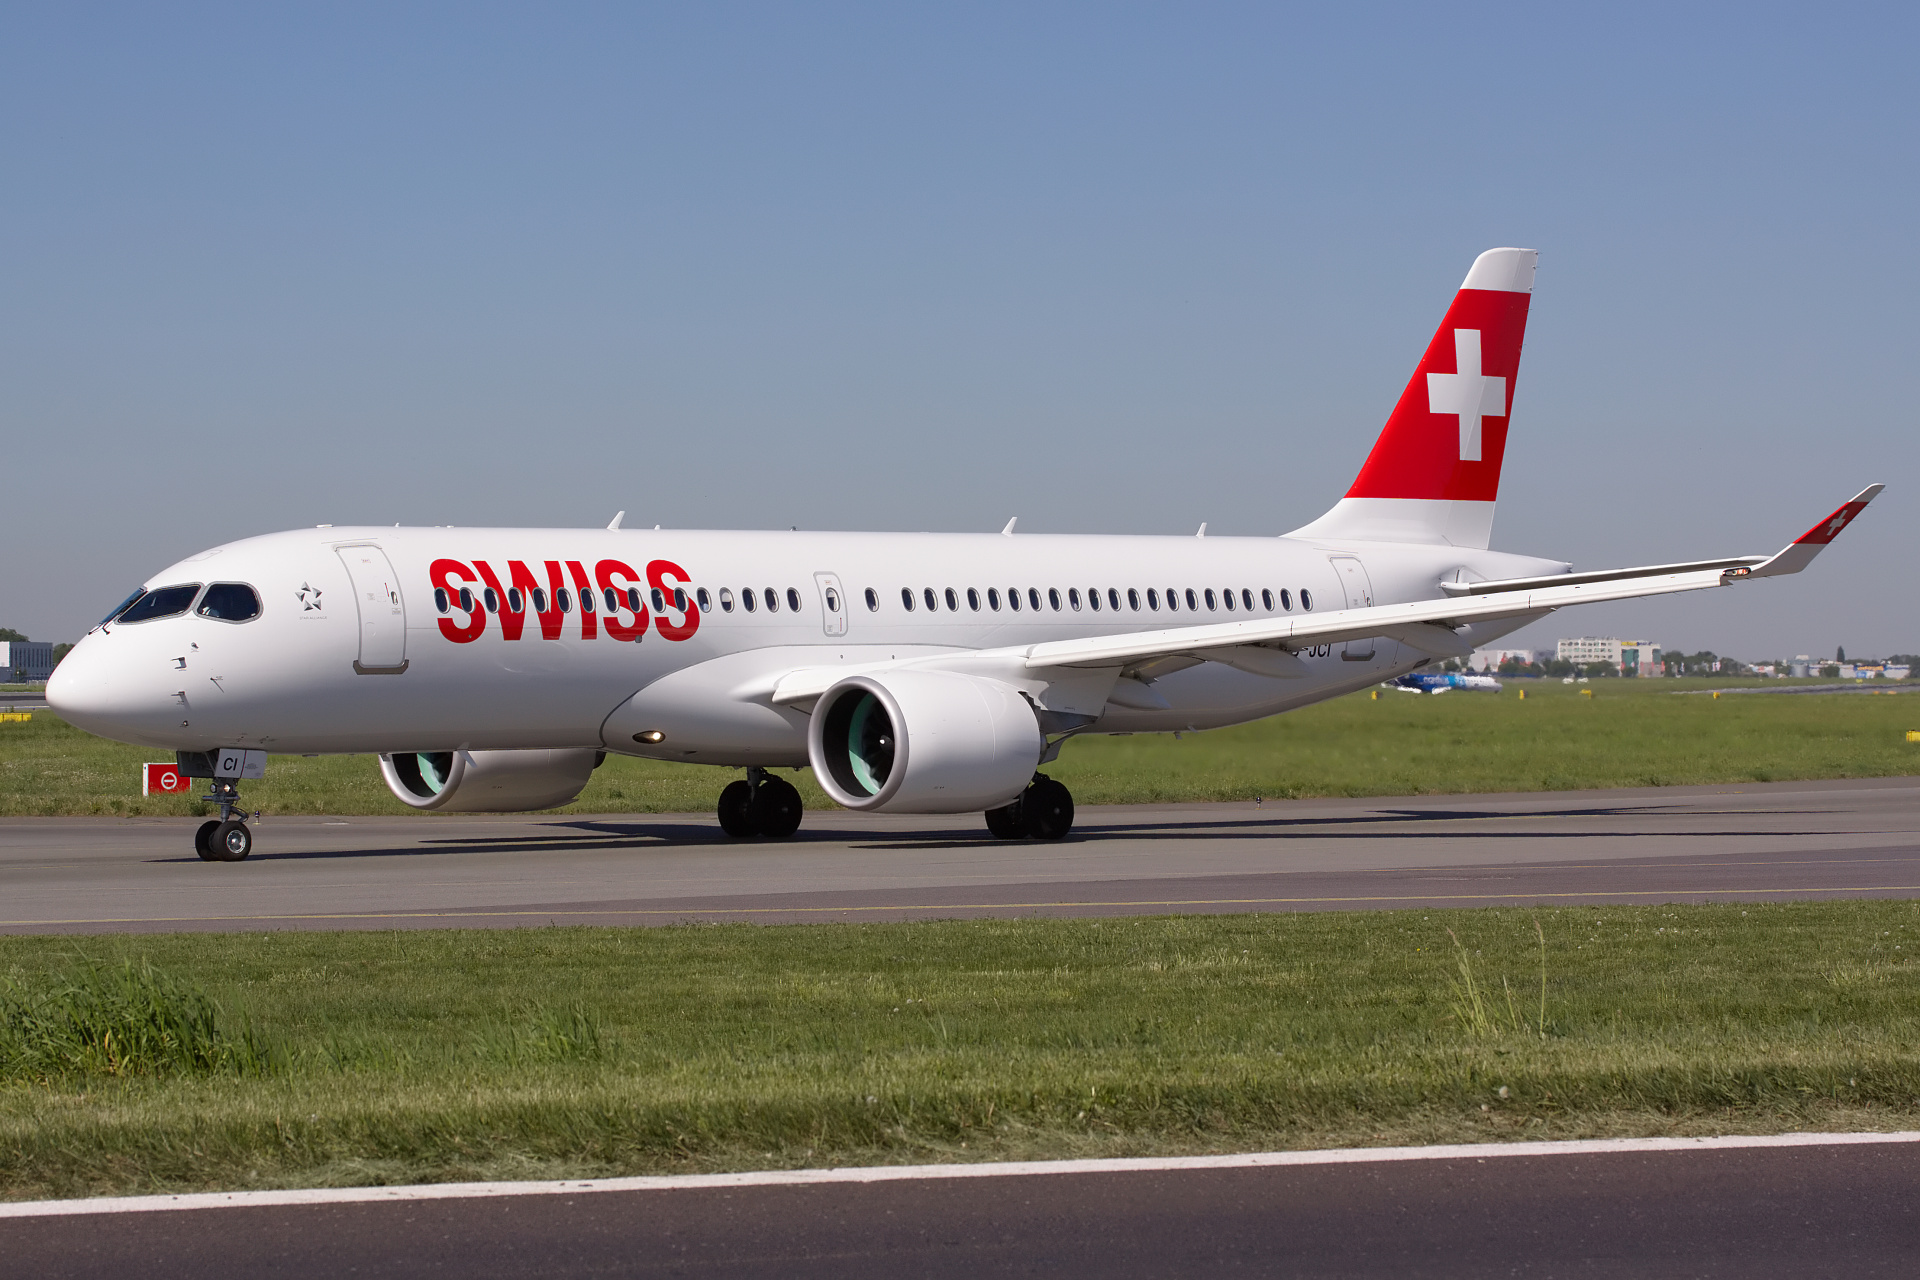 HB-JCI (Samoloty » Spotting na EPWA » Airbus A220-300 » Swiss International Air Lines)